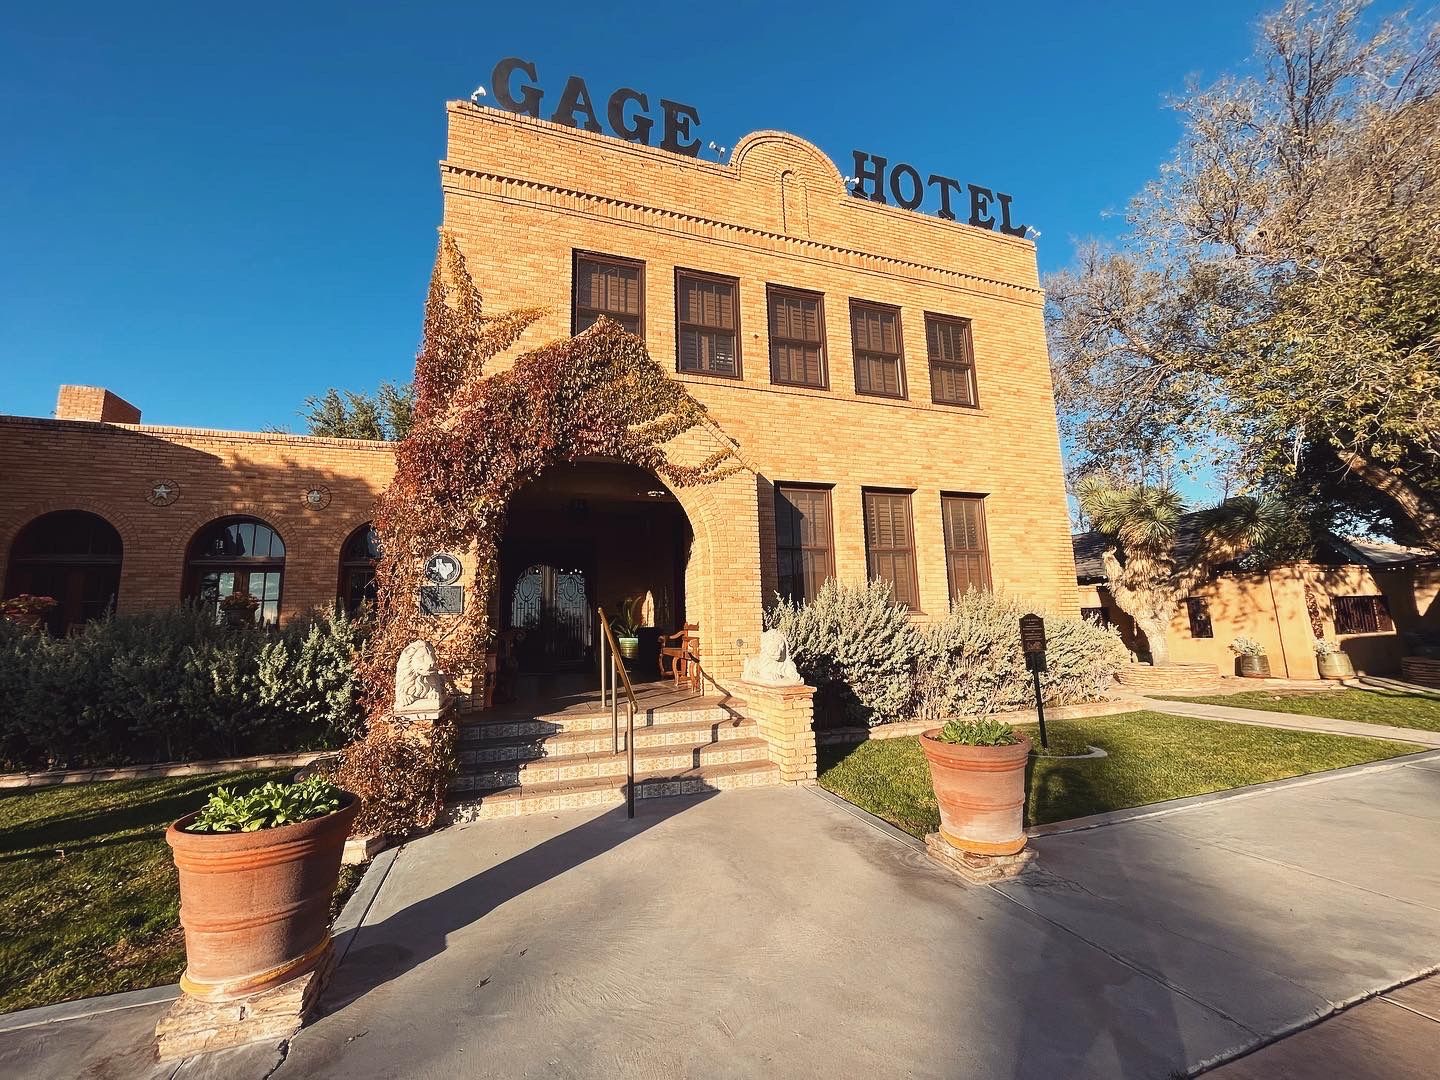 The Gage Hotel's Exterior in Marathon 